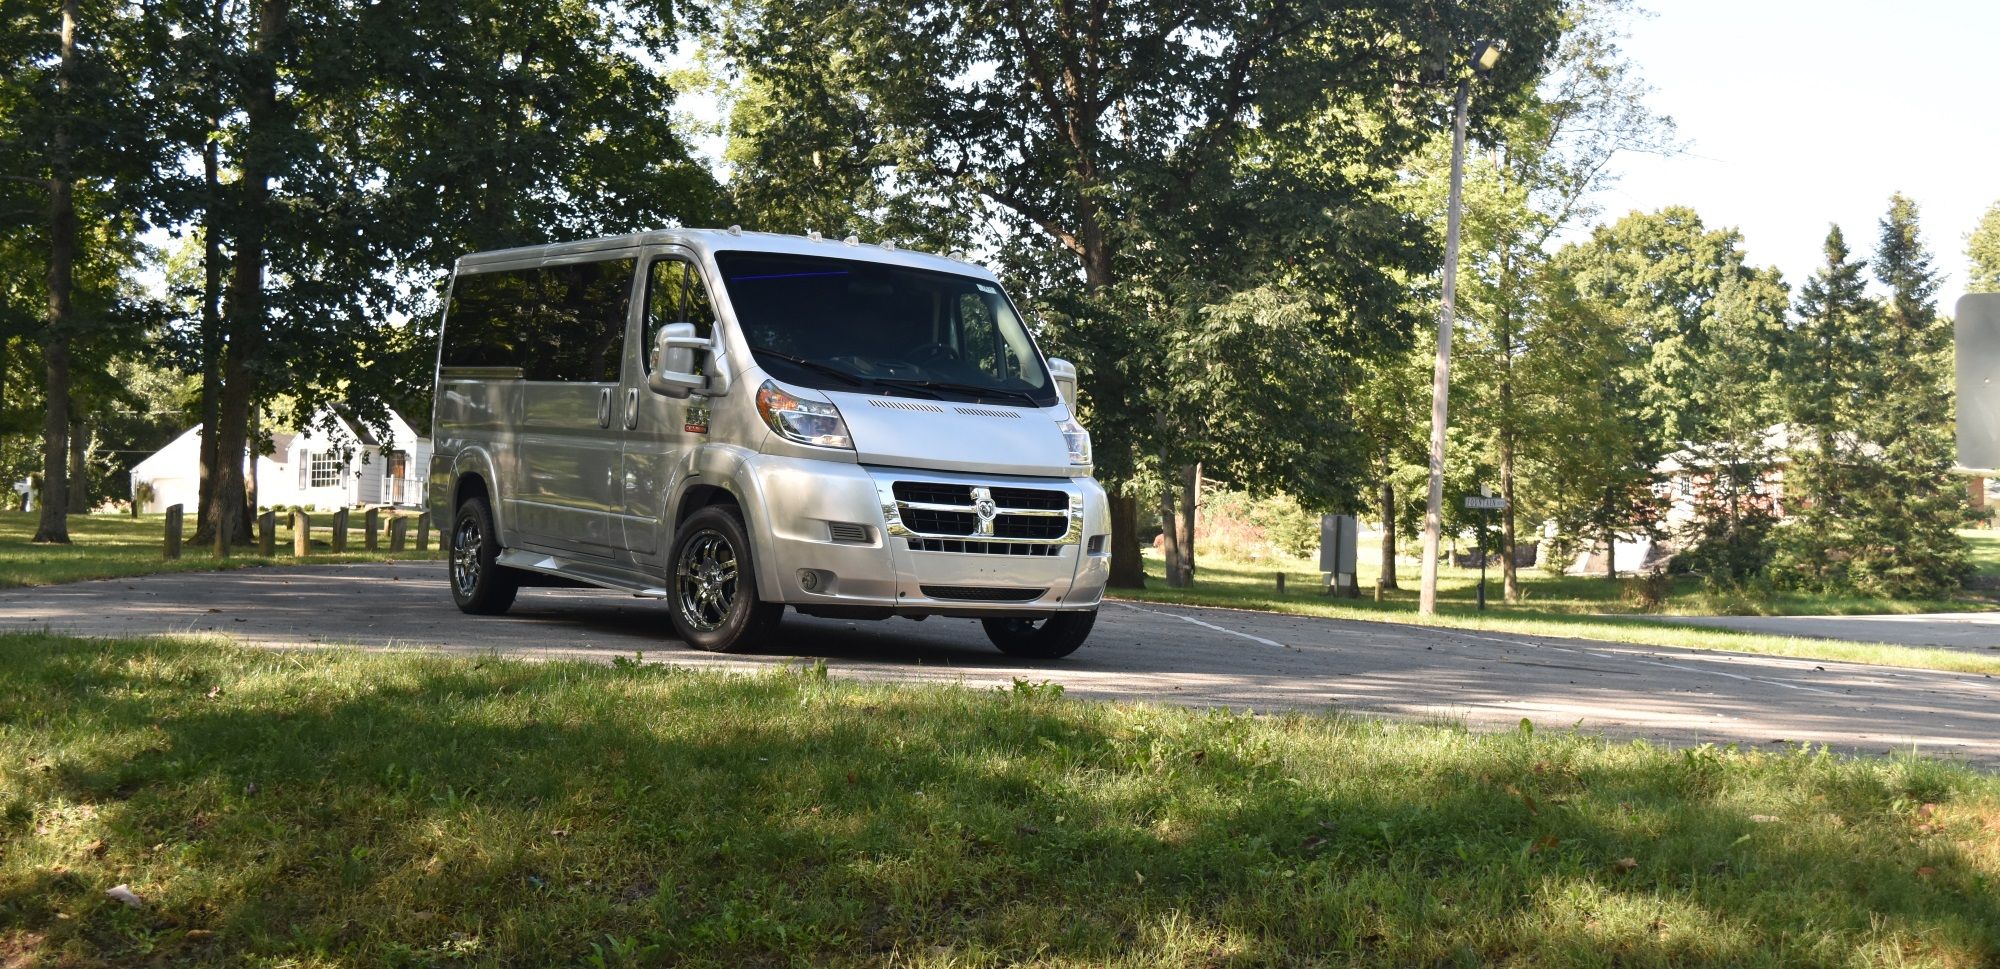 Custom Order UVL Ram ProMaster Mobility Van  Conversion Vans For Sale at  Paul Sherry Conversion Vans